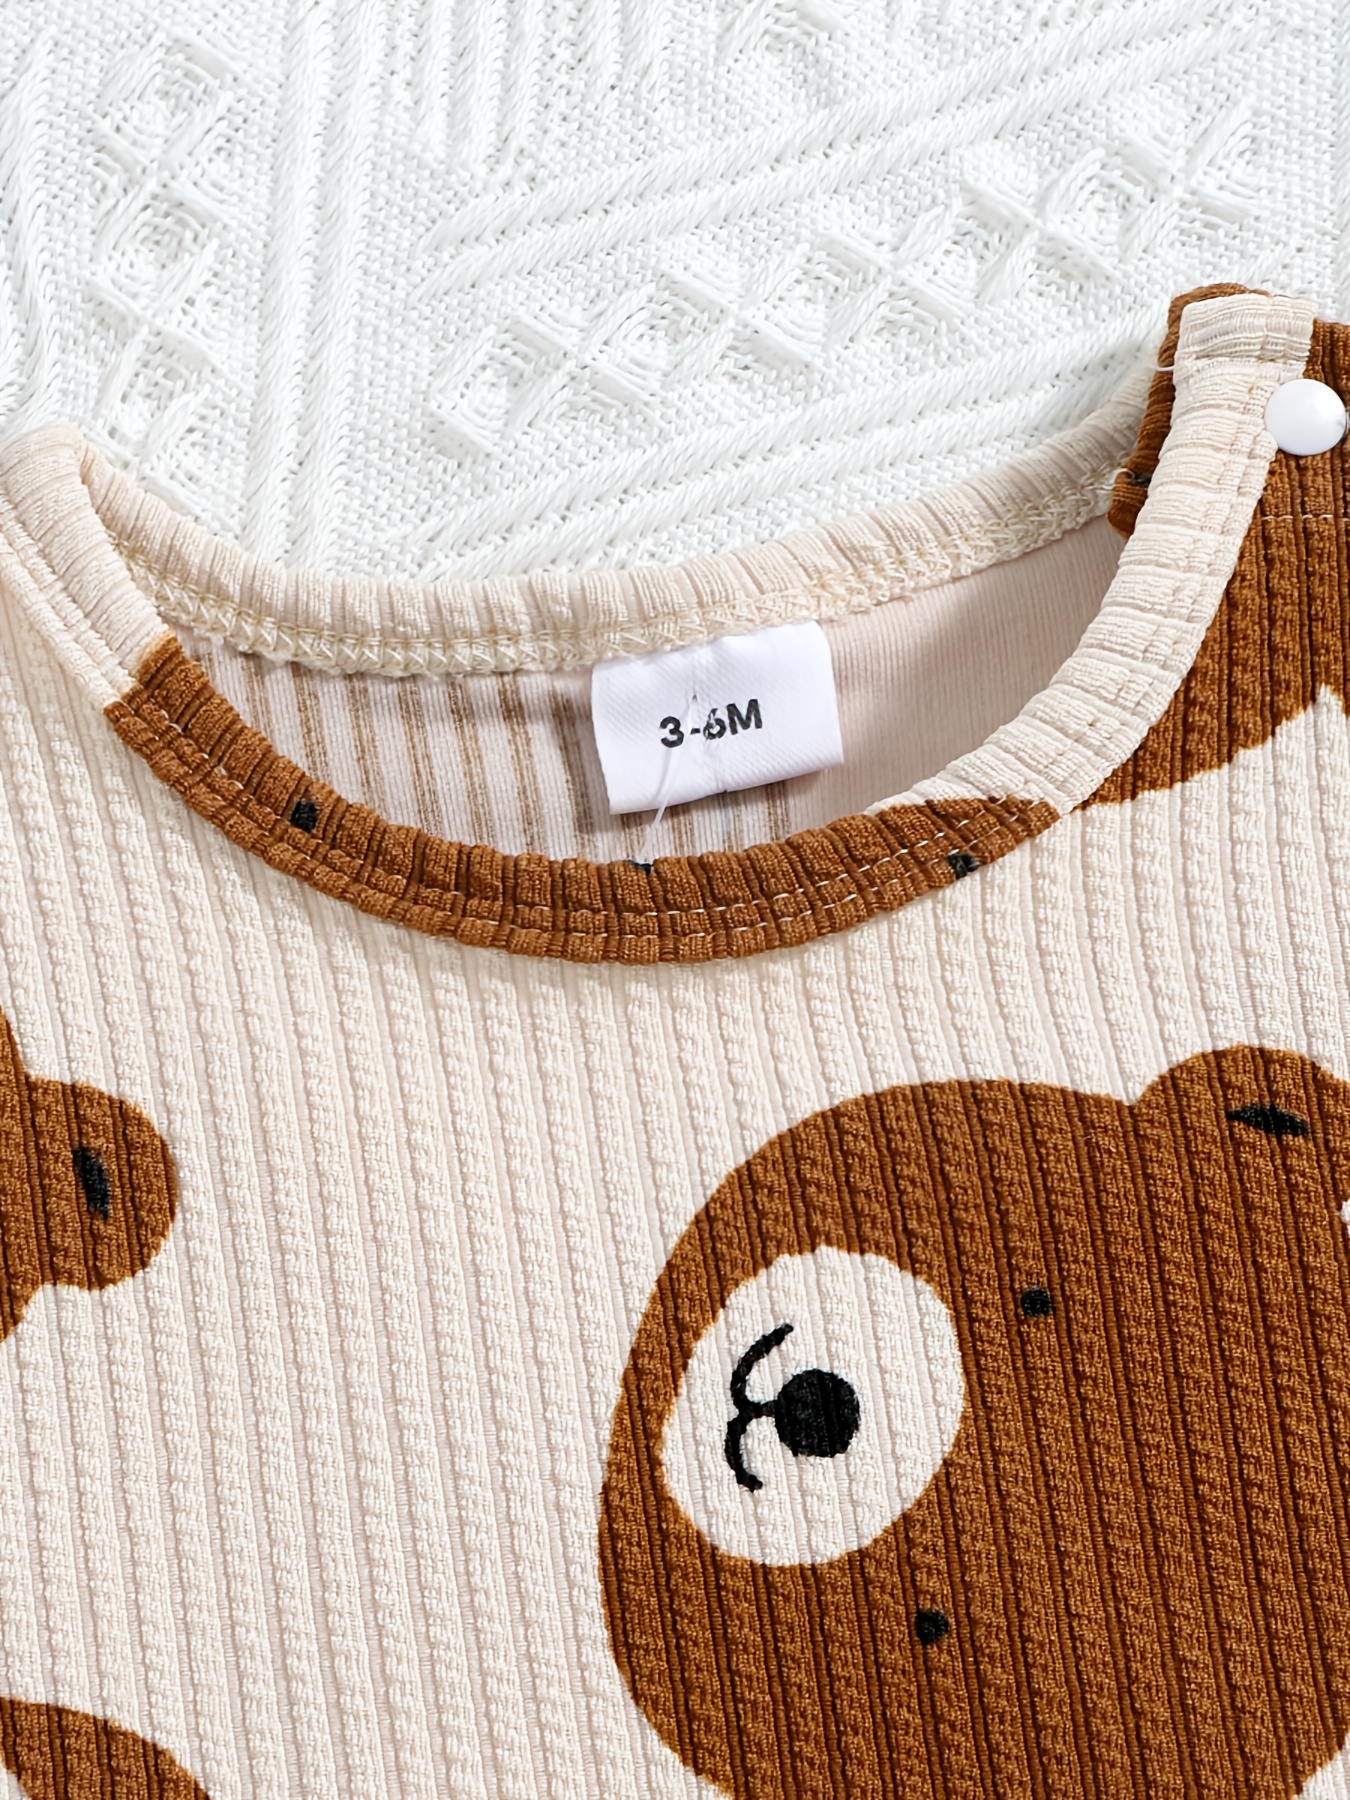 2pcs Baby Boy/Girl Striped Short-sleeve Top and Bear Print Denim Overalls Shorts Set